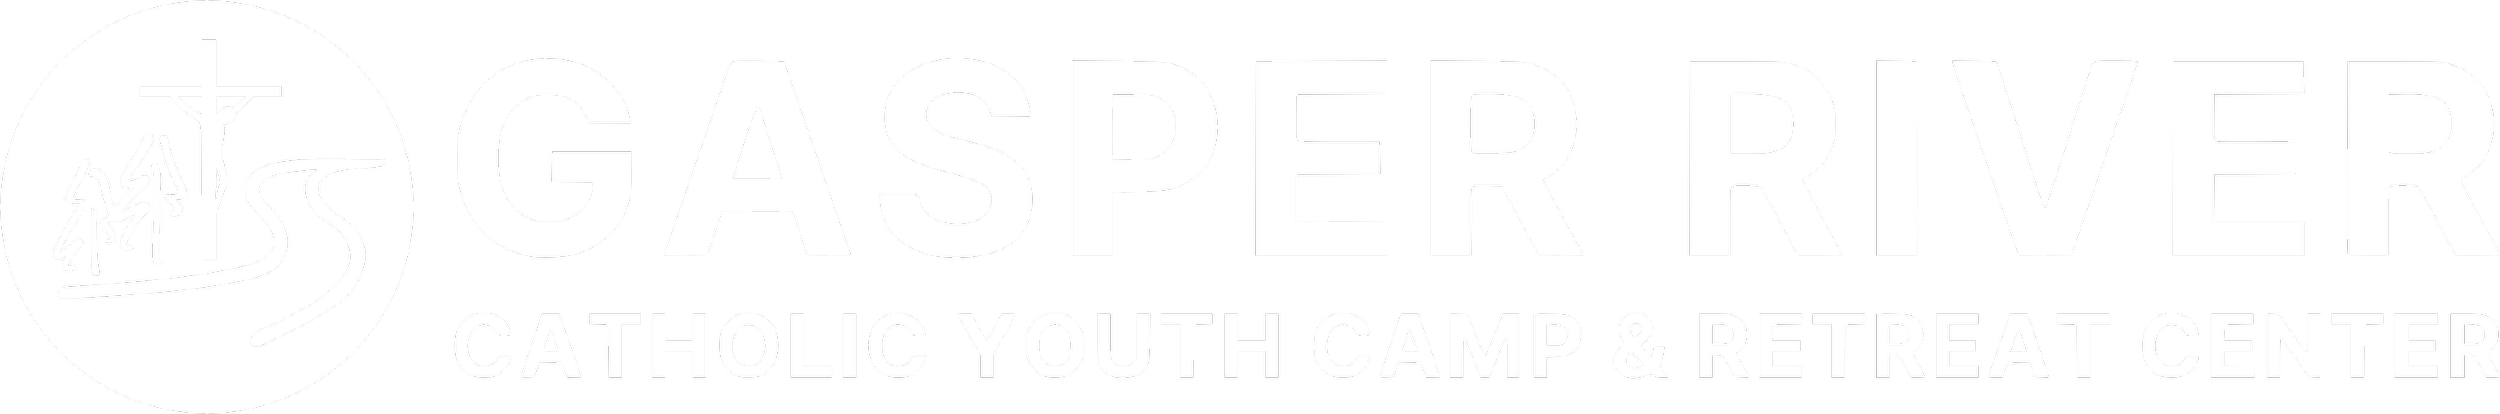 Gasper River Catholic Youth Camp &amp; Retreat Center 